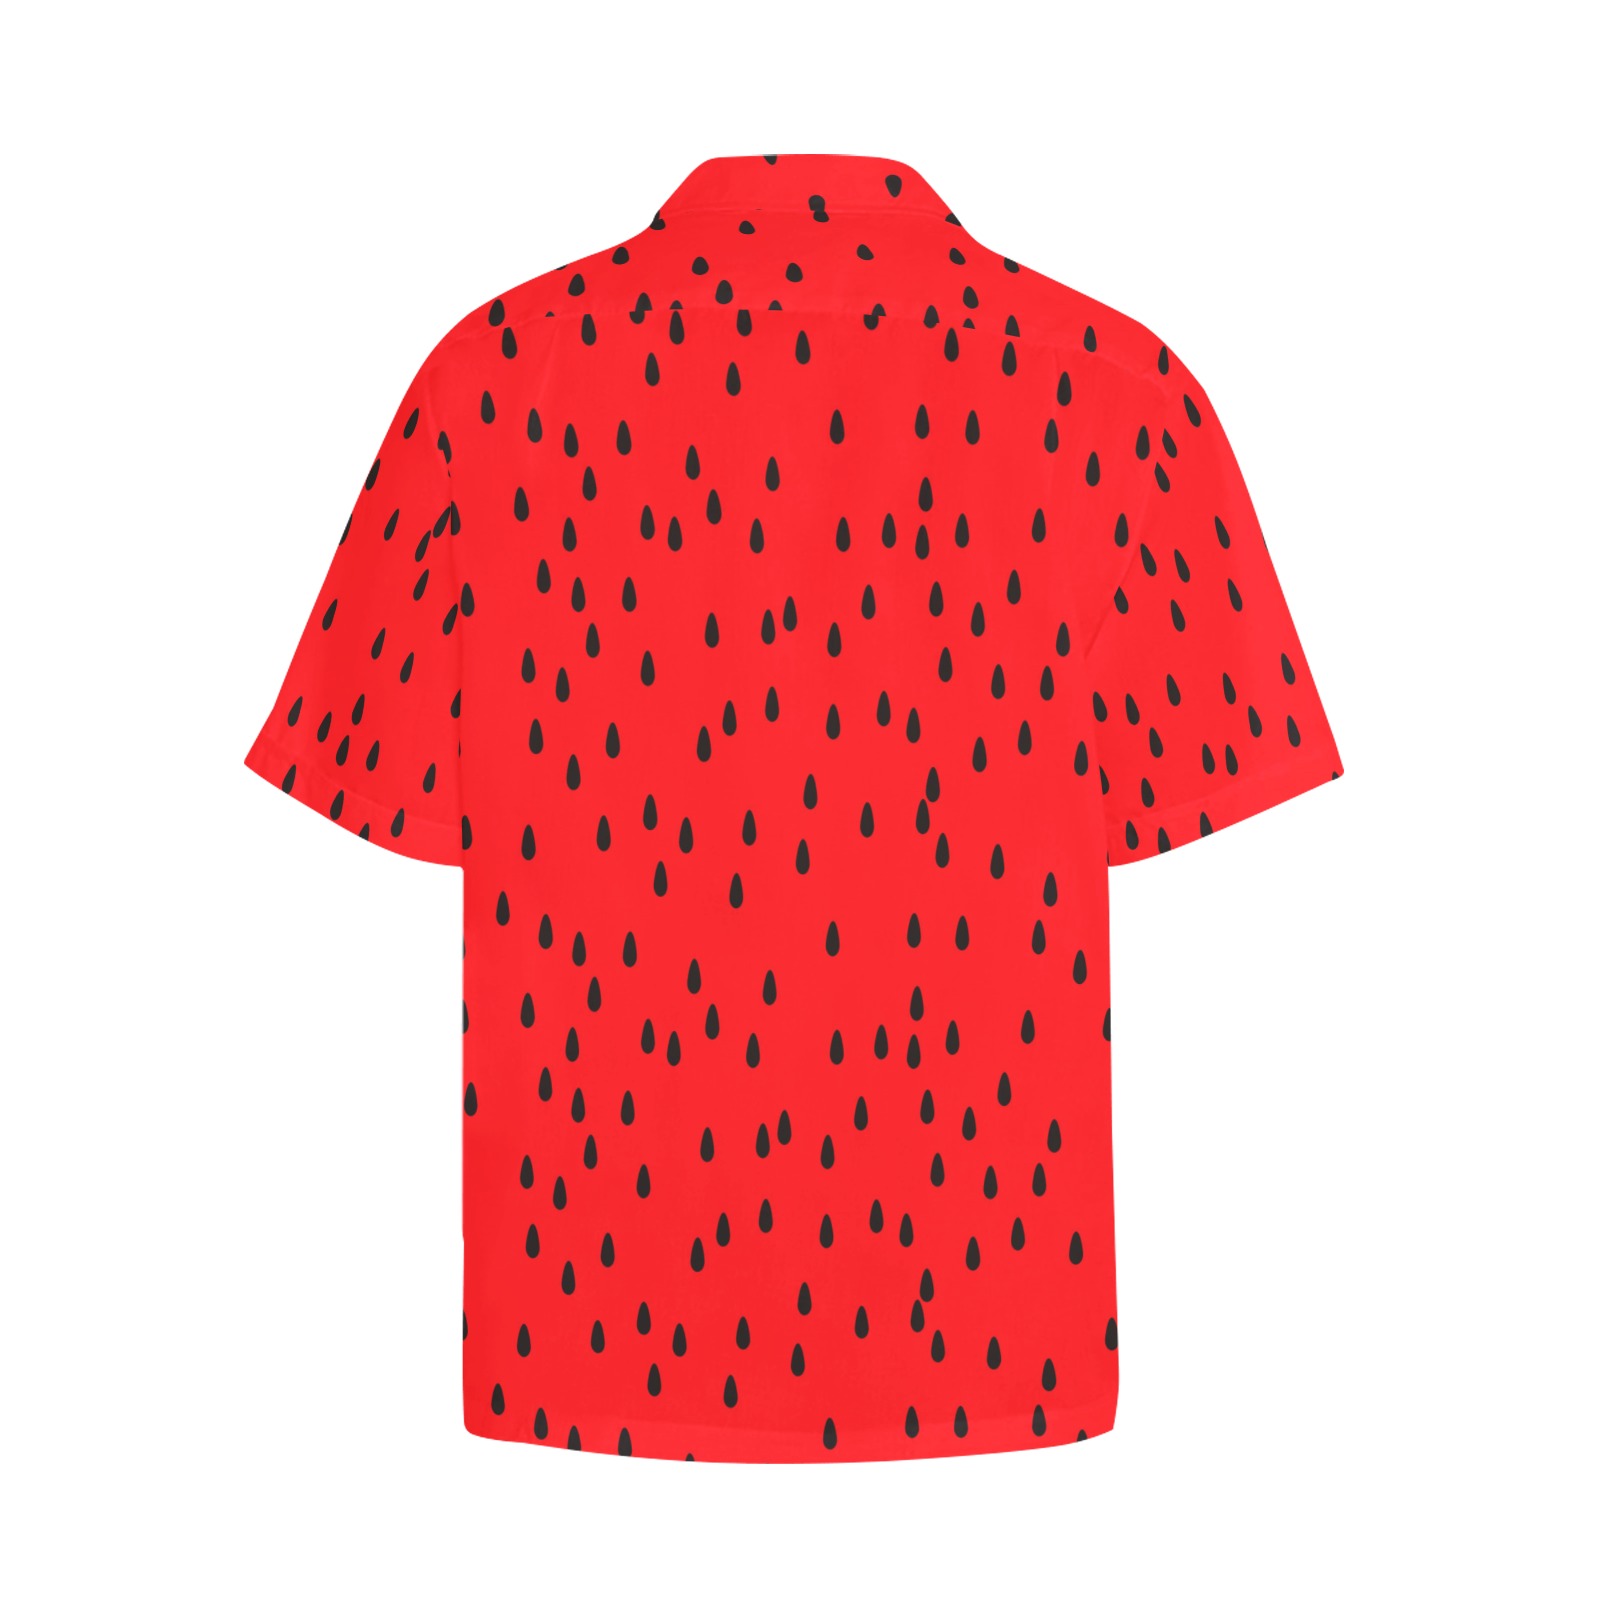 Watermelon Hawaiian Shirt with Chest Pocket (Model T58)